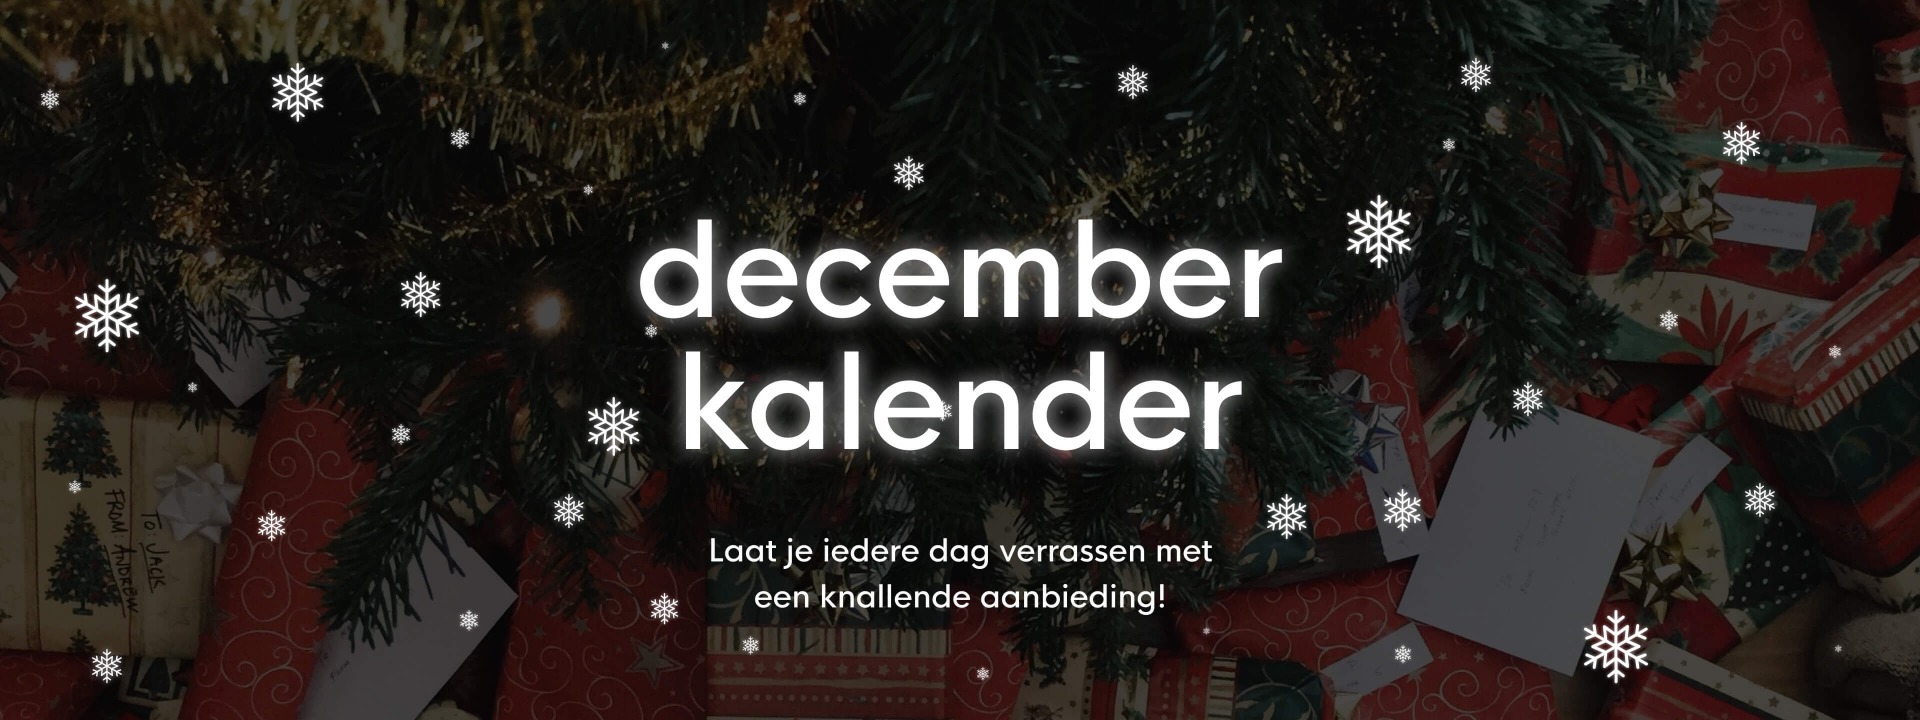 Slider-Header-1920x720px-1-december-kalender.jpg